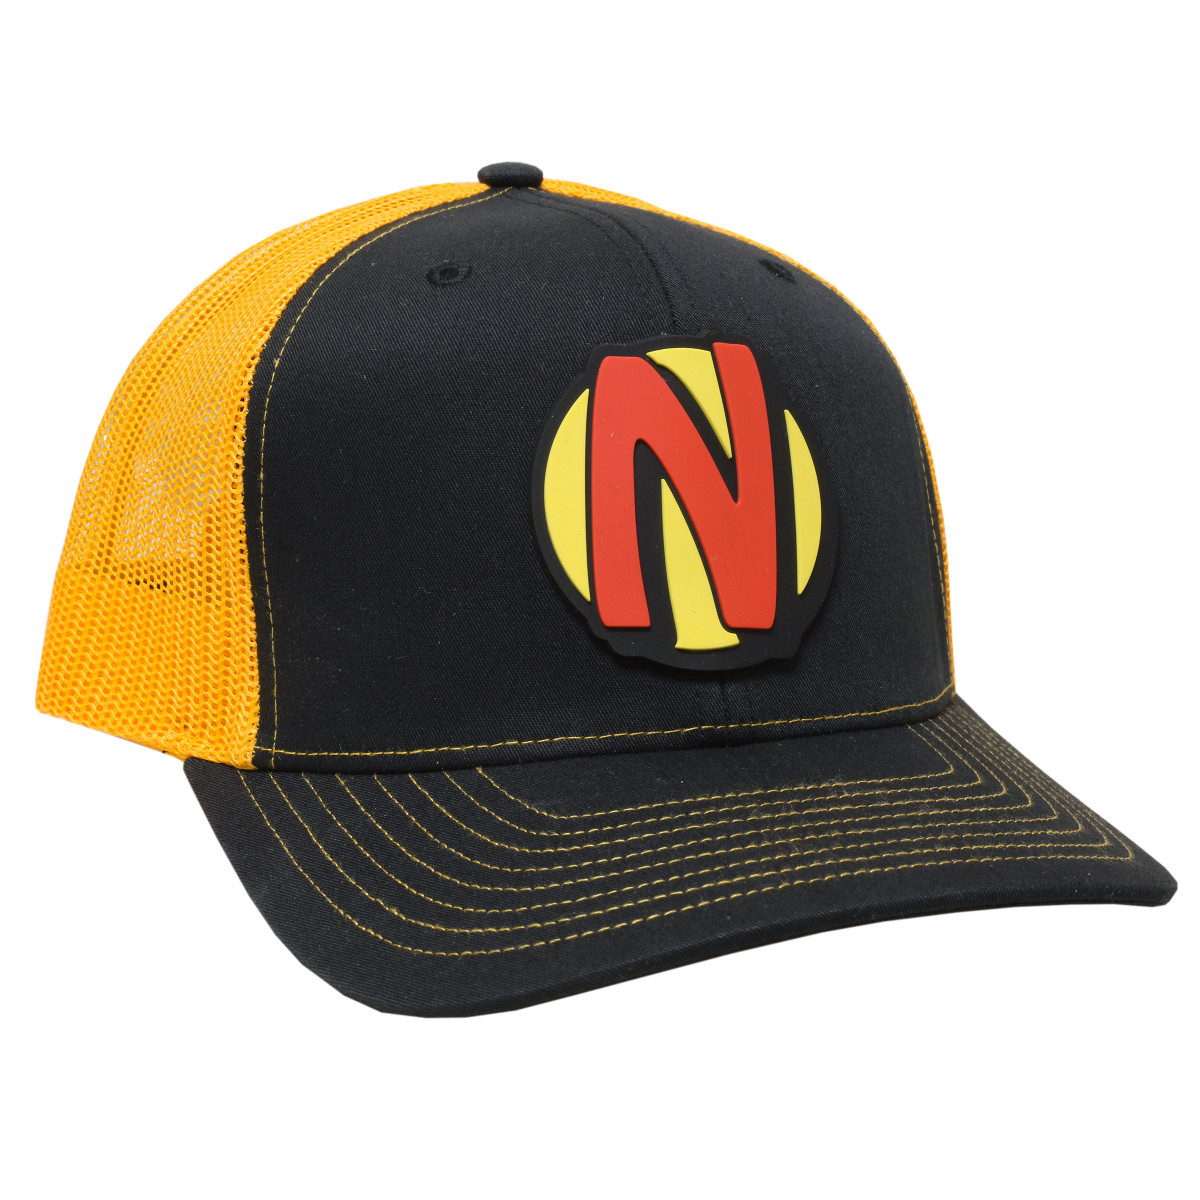 NORTHLAND BLACK/GOLD HAT